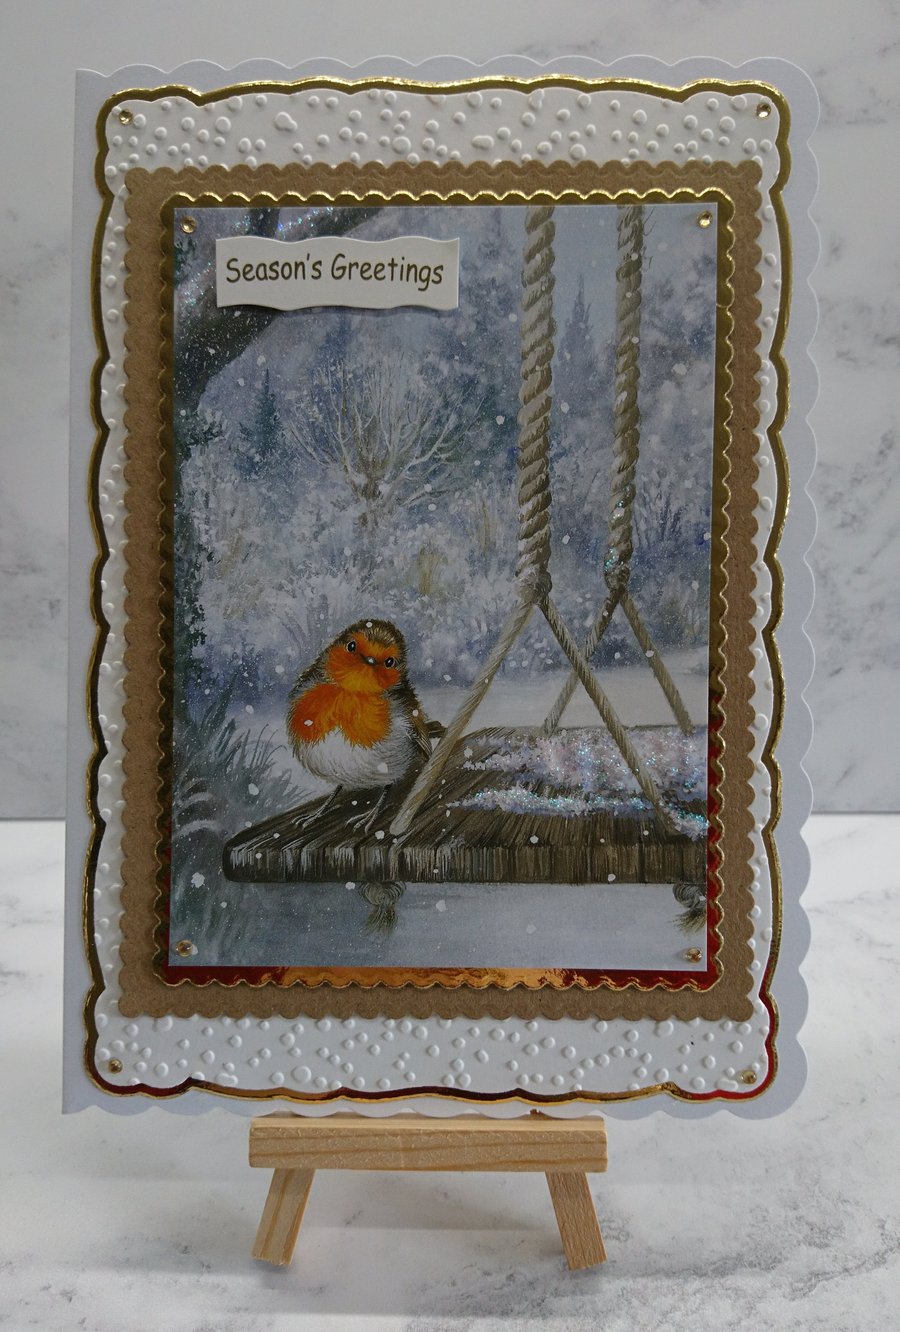 Christmas Card Season's Greetings Robins Snowy Garden Swing 3D Luxury Handmade